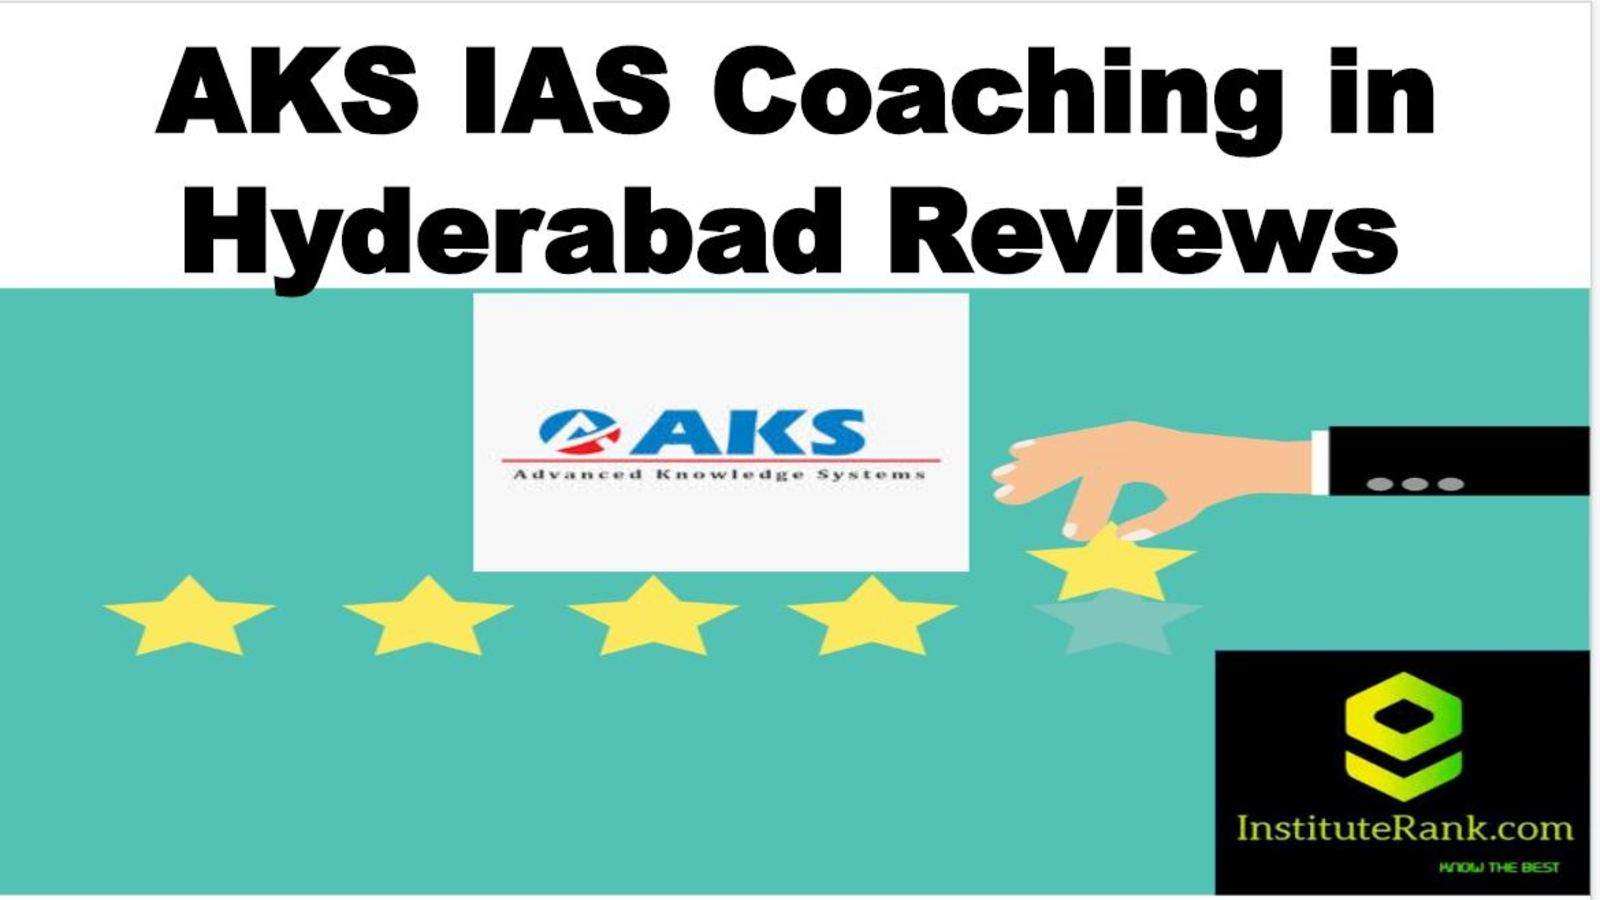 AKS IAS Coaching Hyderabad Reviews